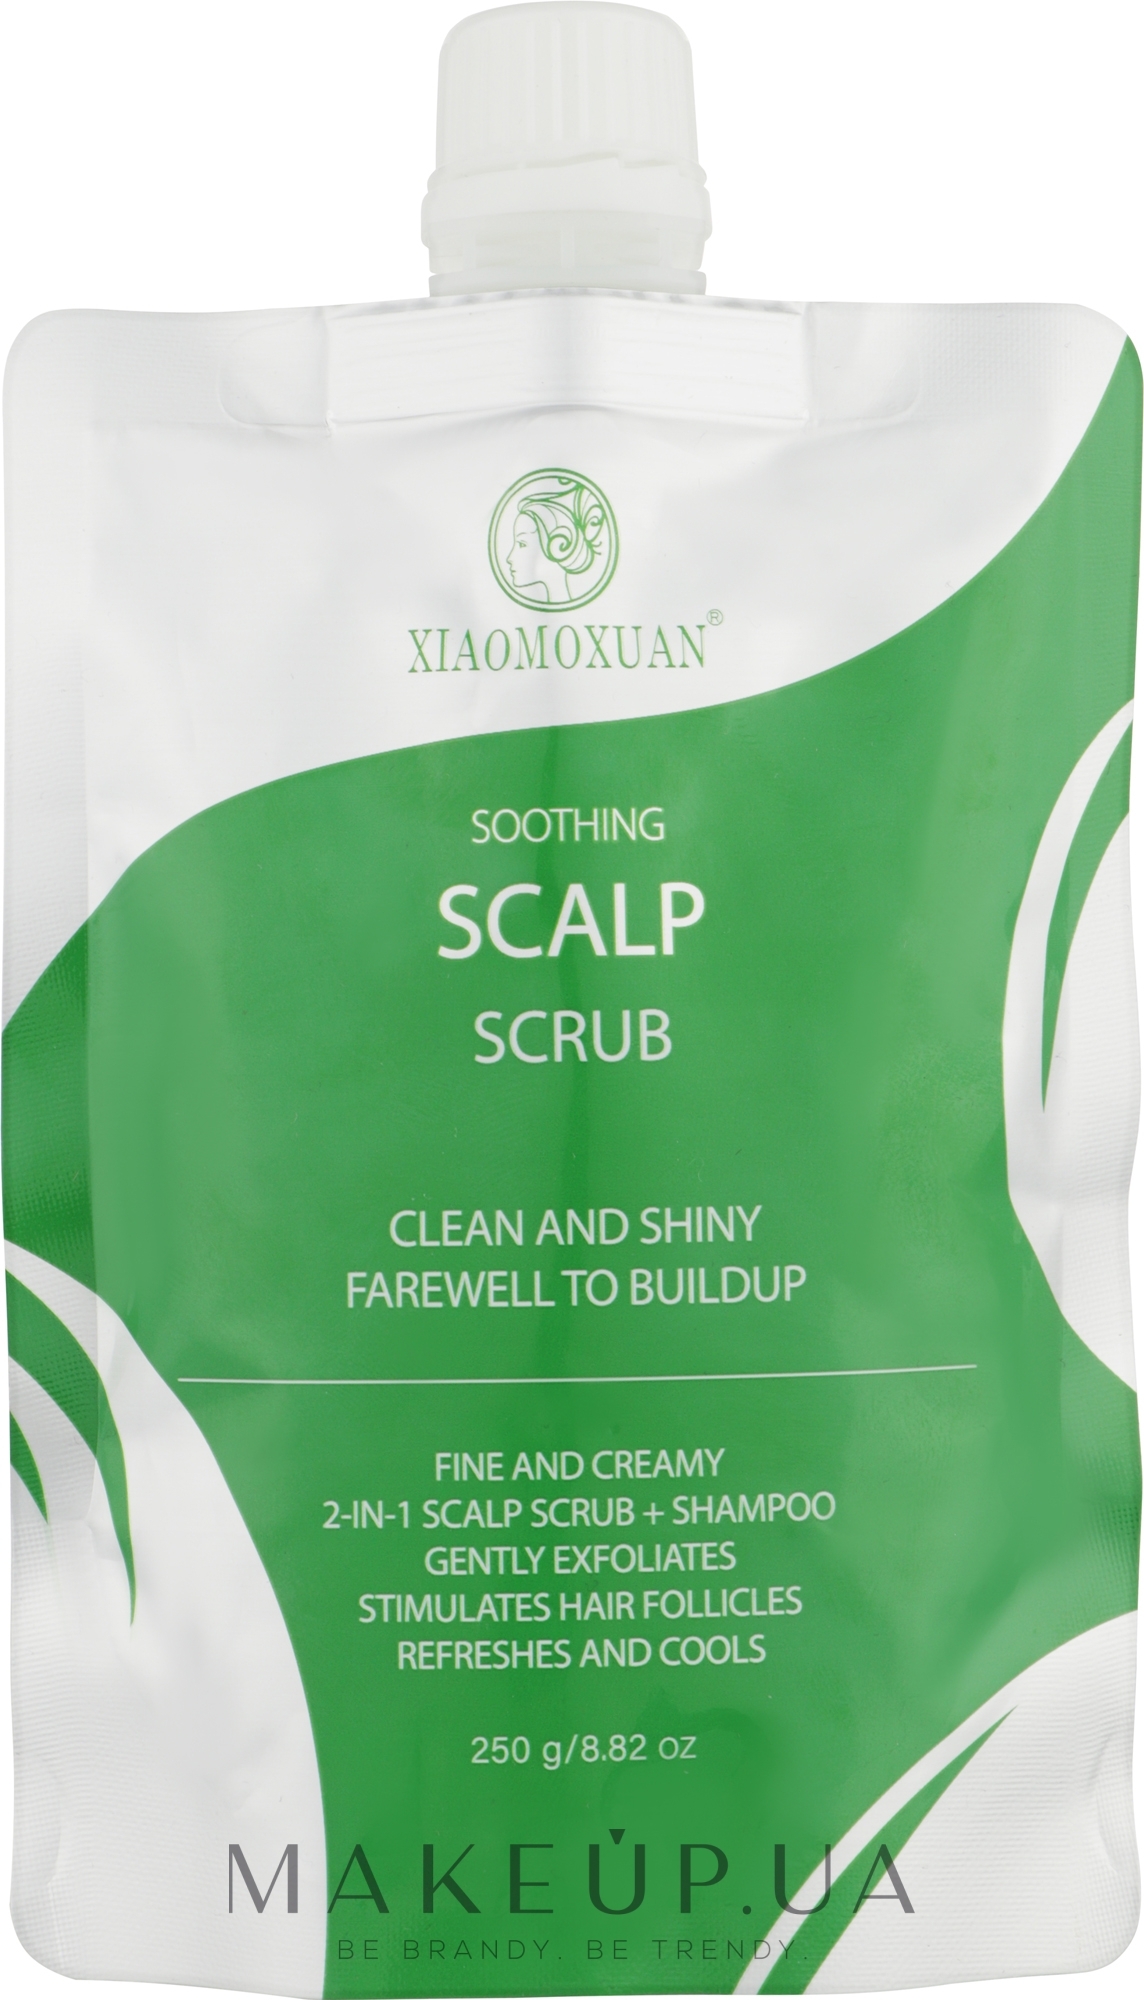 Скраб-шампунь для волосся - Xiaomoxuan Soothing Scalp Scrub — фото 250g